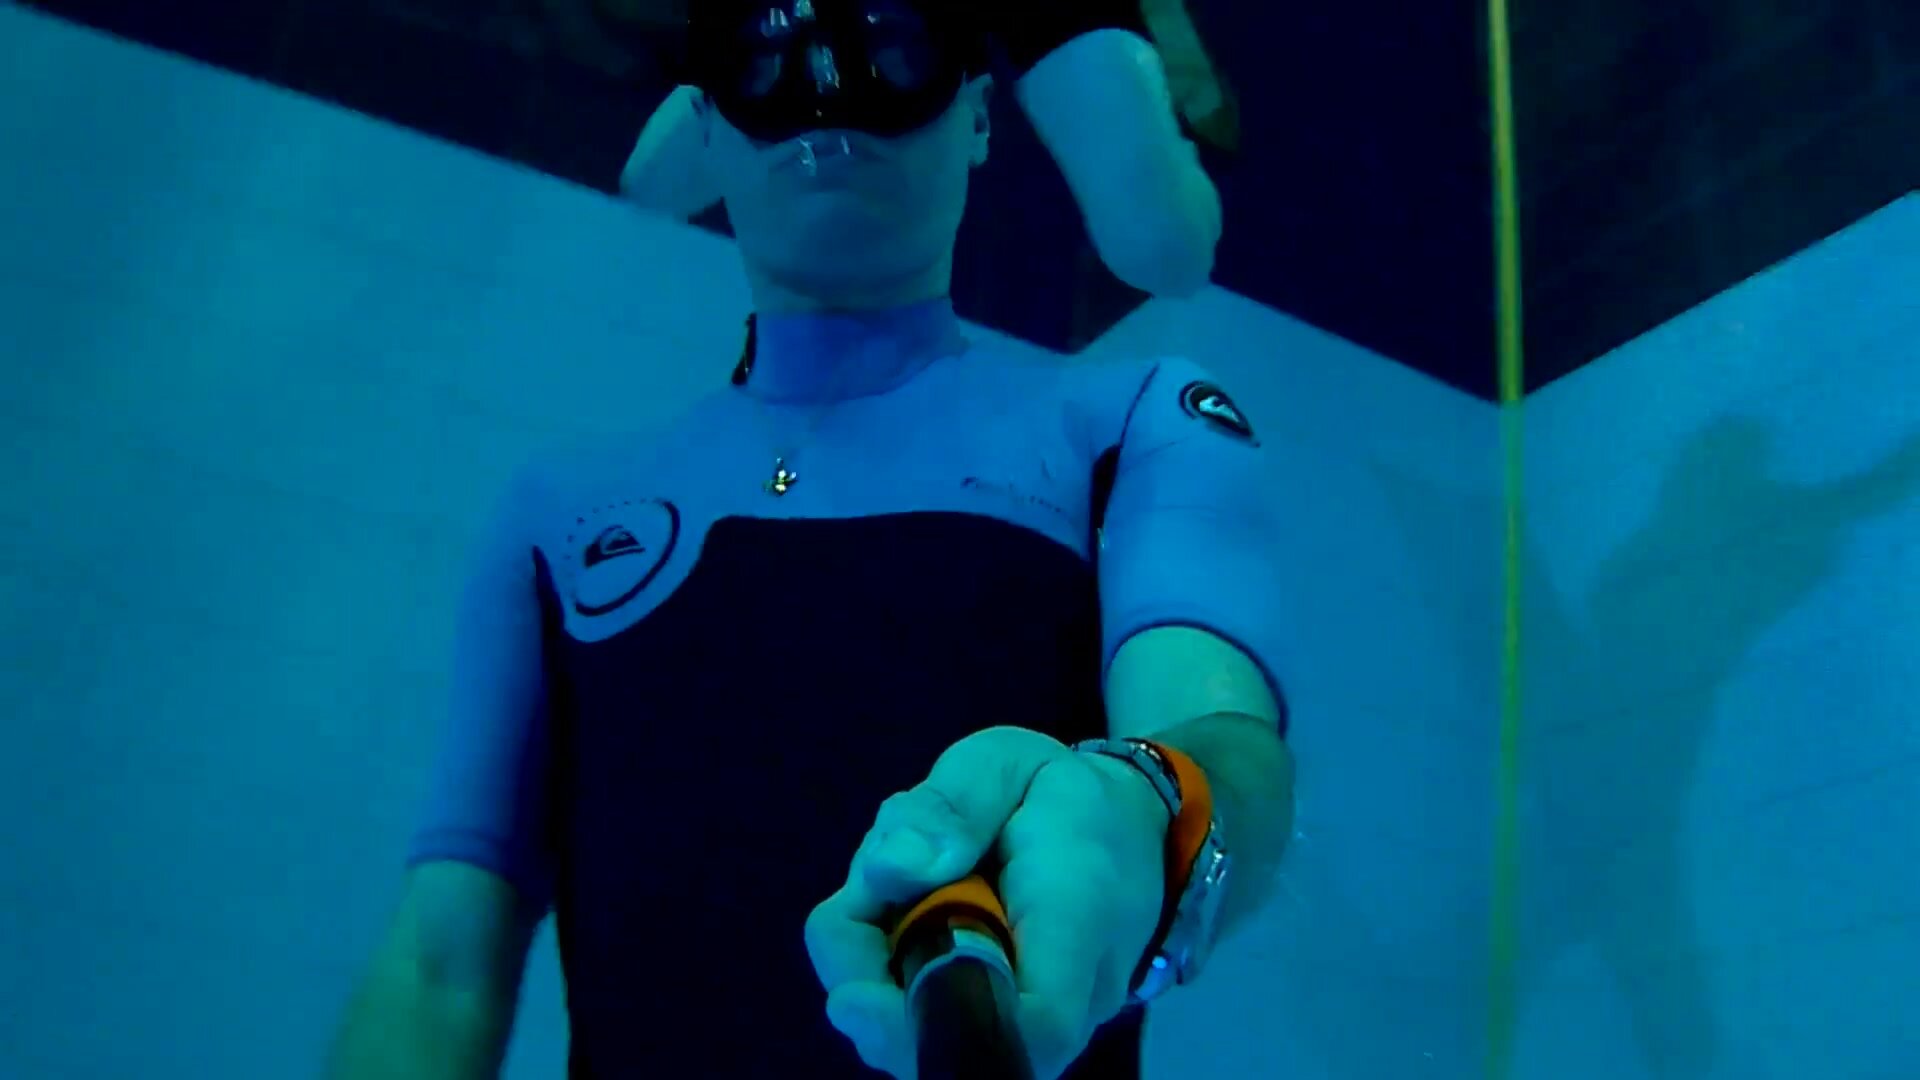 Freediving underwater in tight wetsuit